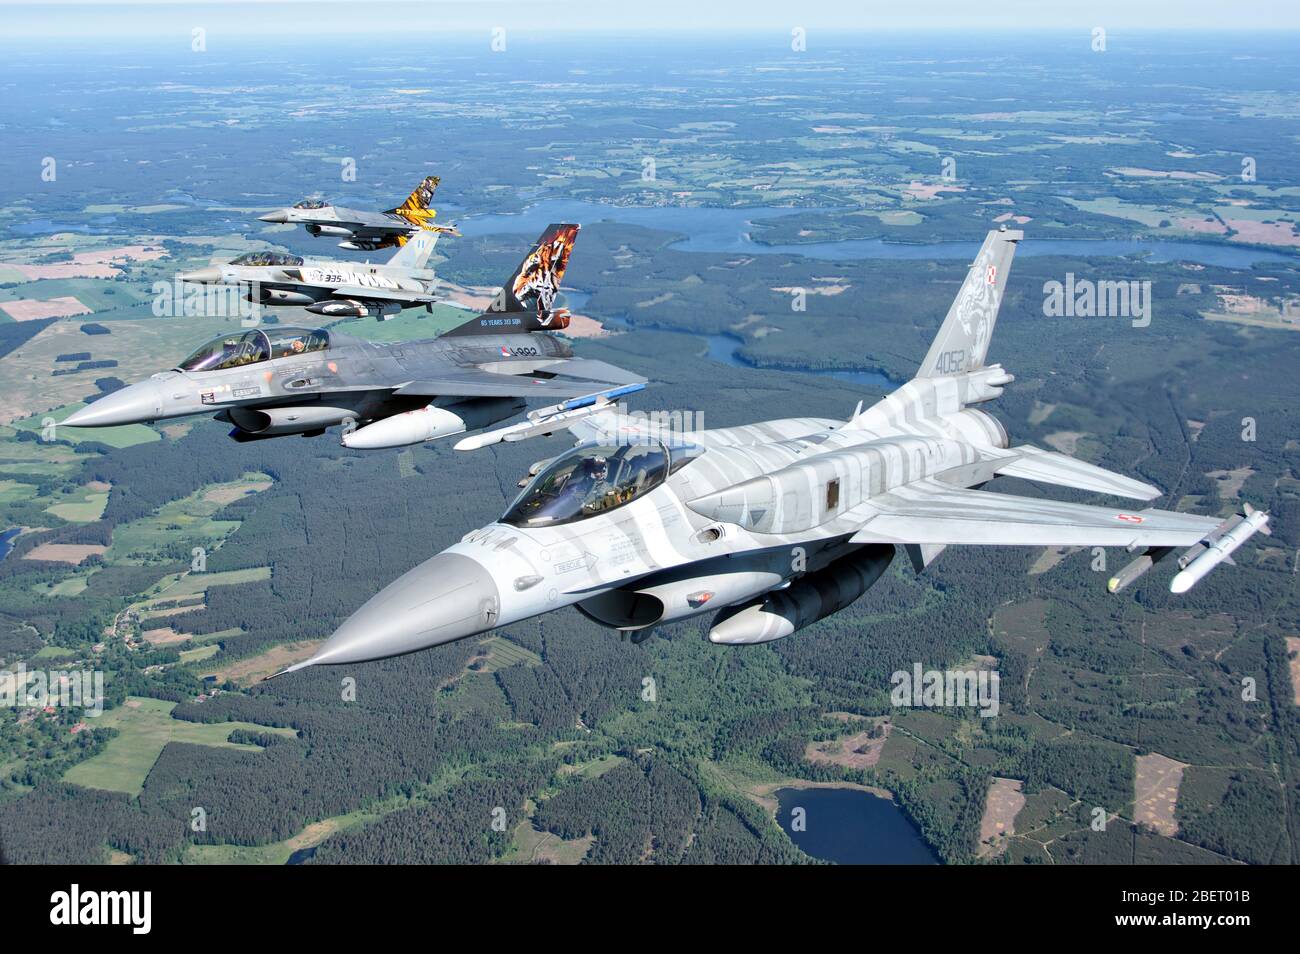 Polish Air Force F-16 aircraft during Exercise NATO Tiger Meet Stock Photo